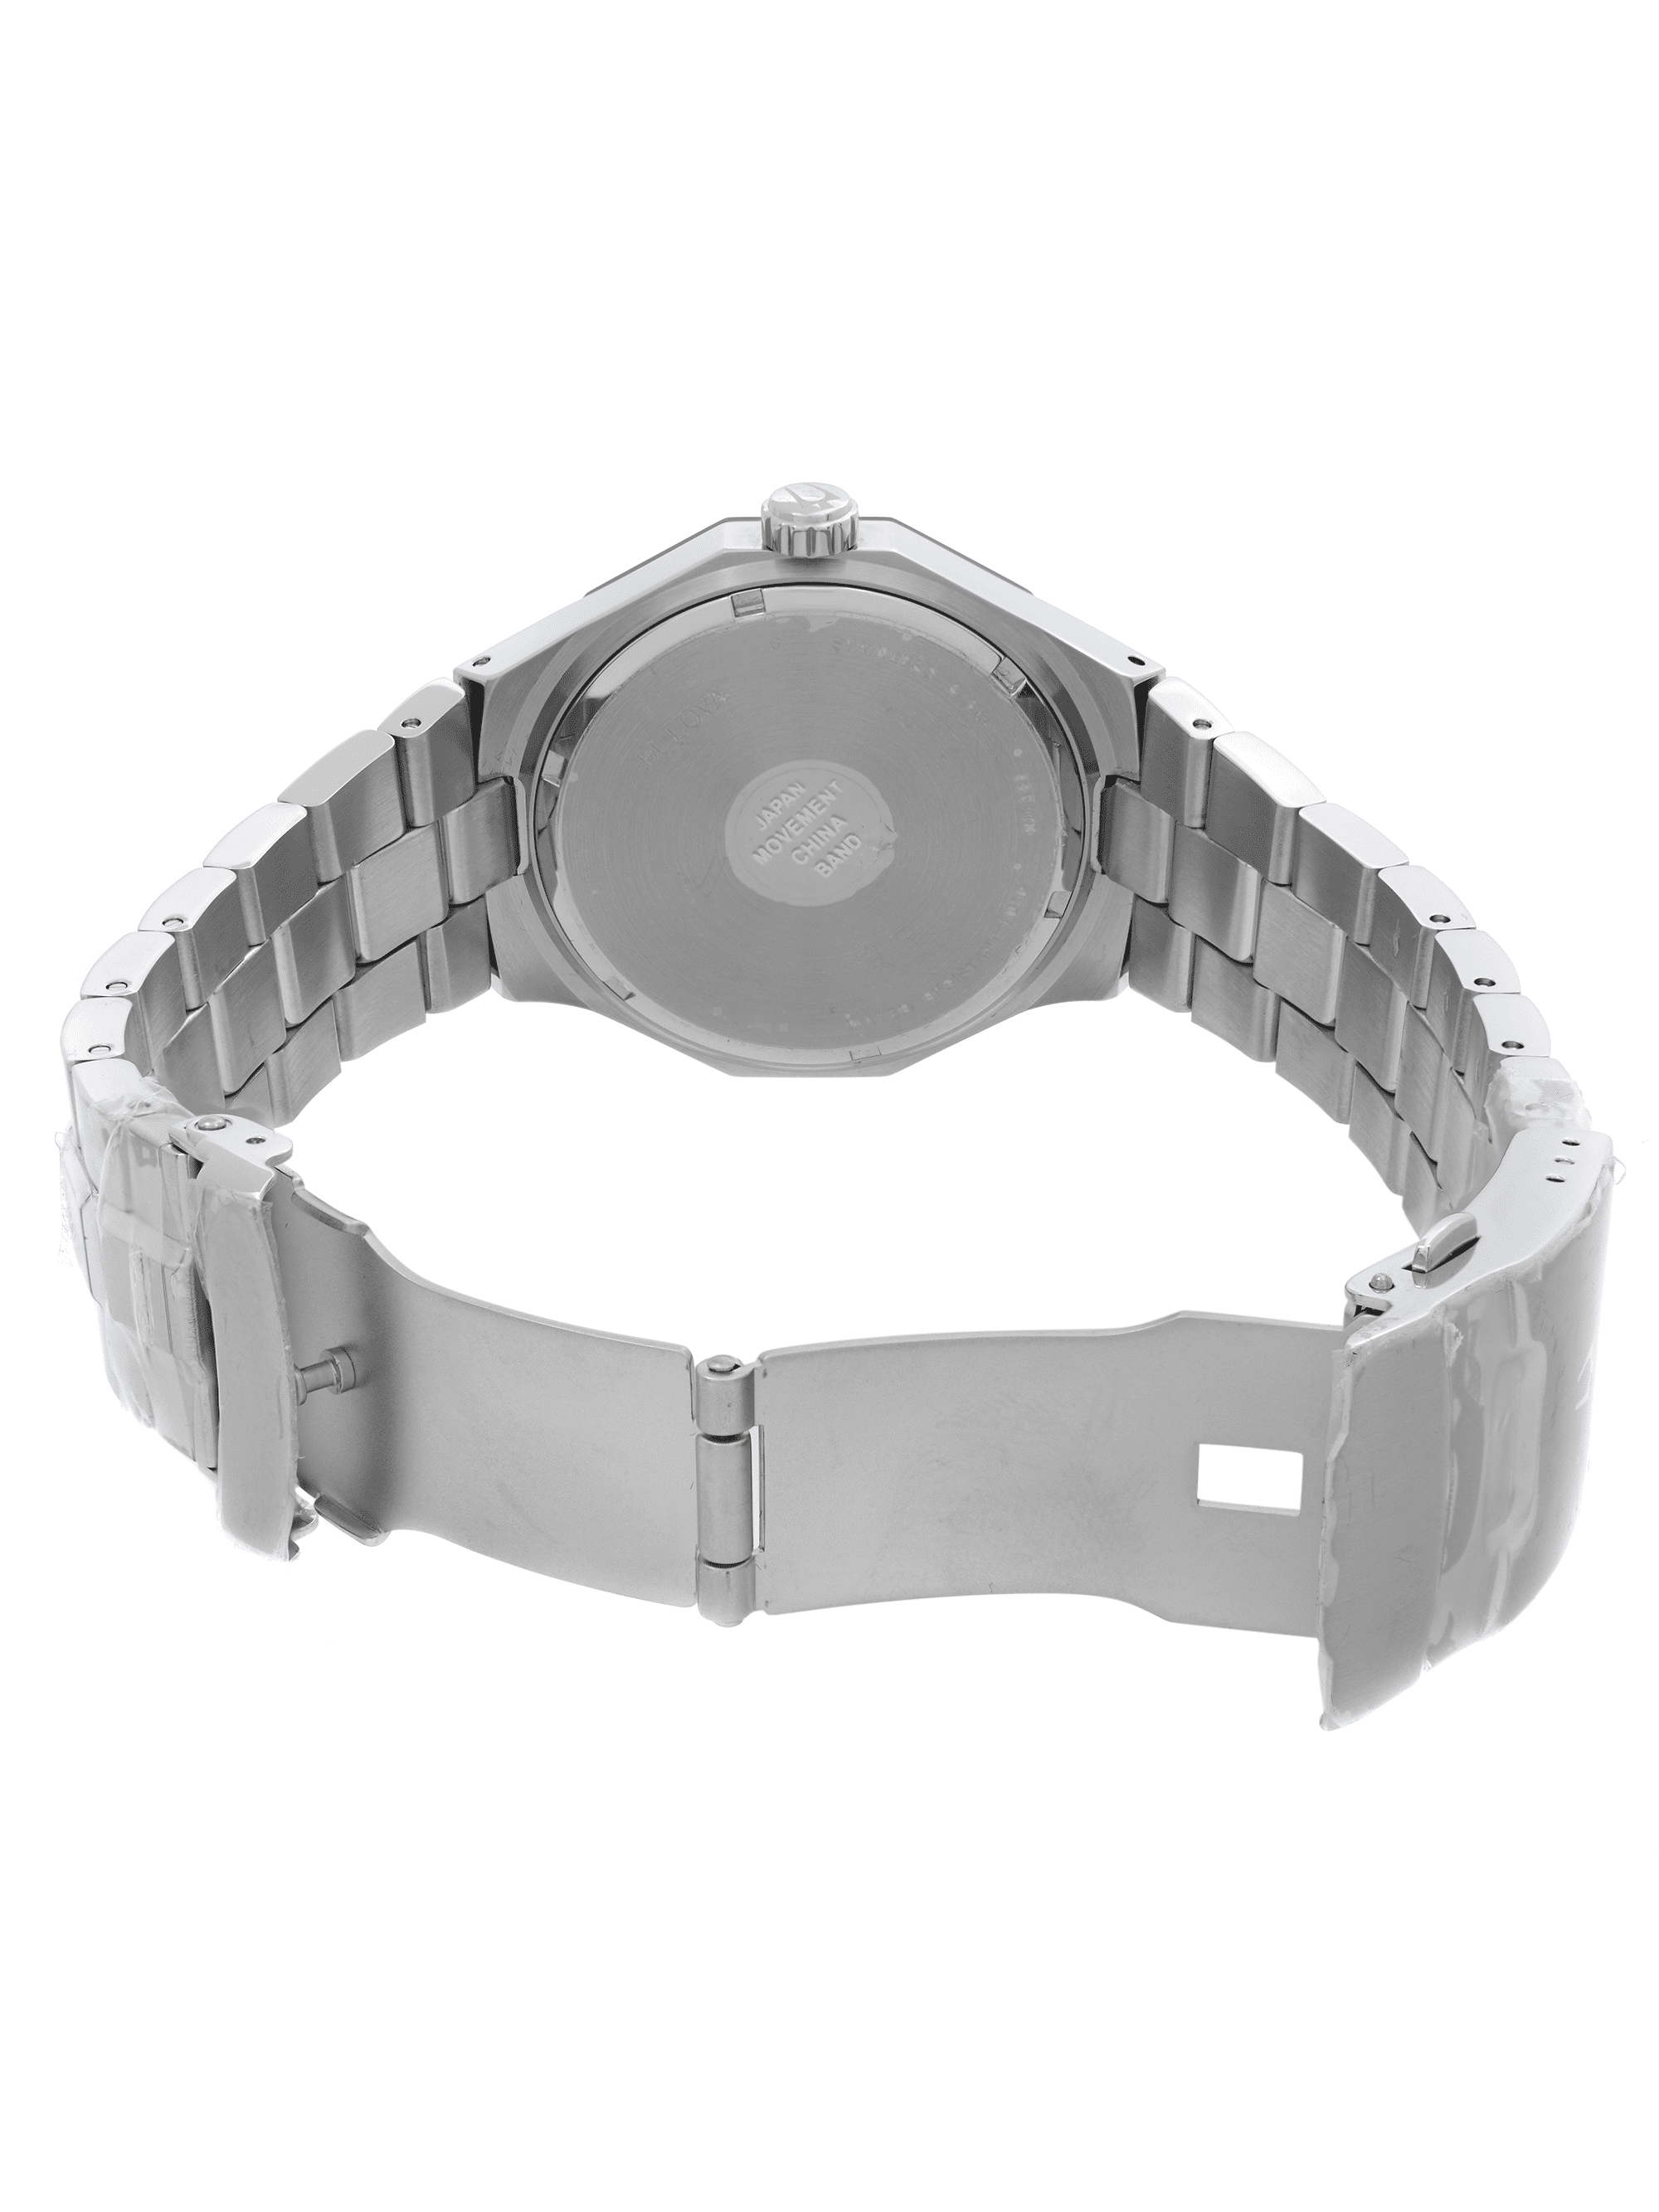 Bulova Men's Marine Star Diamond Accented Stainless Steel Watch